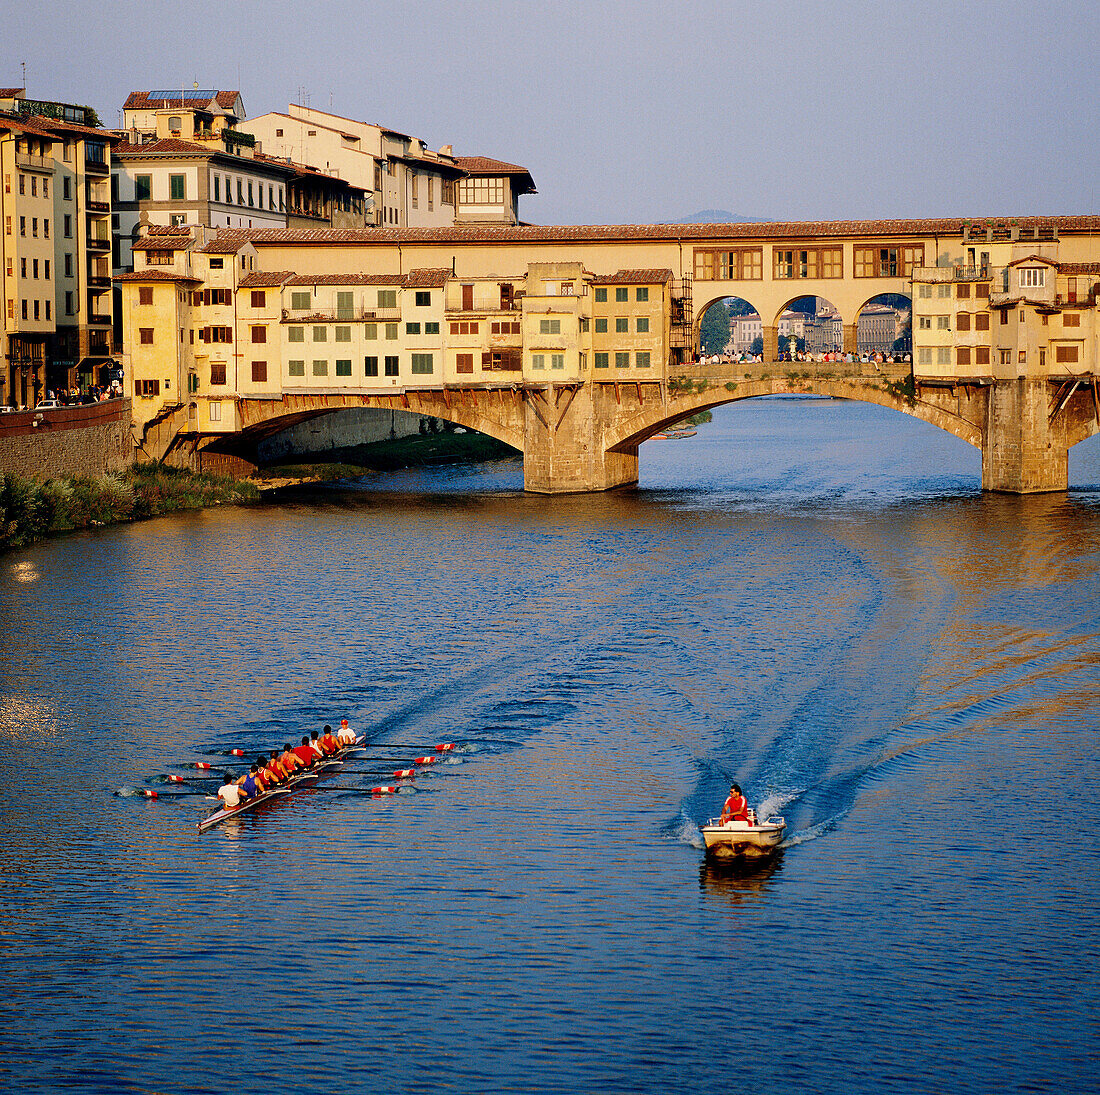 Ponte Vecchio bridge in Florence, Italy